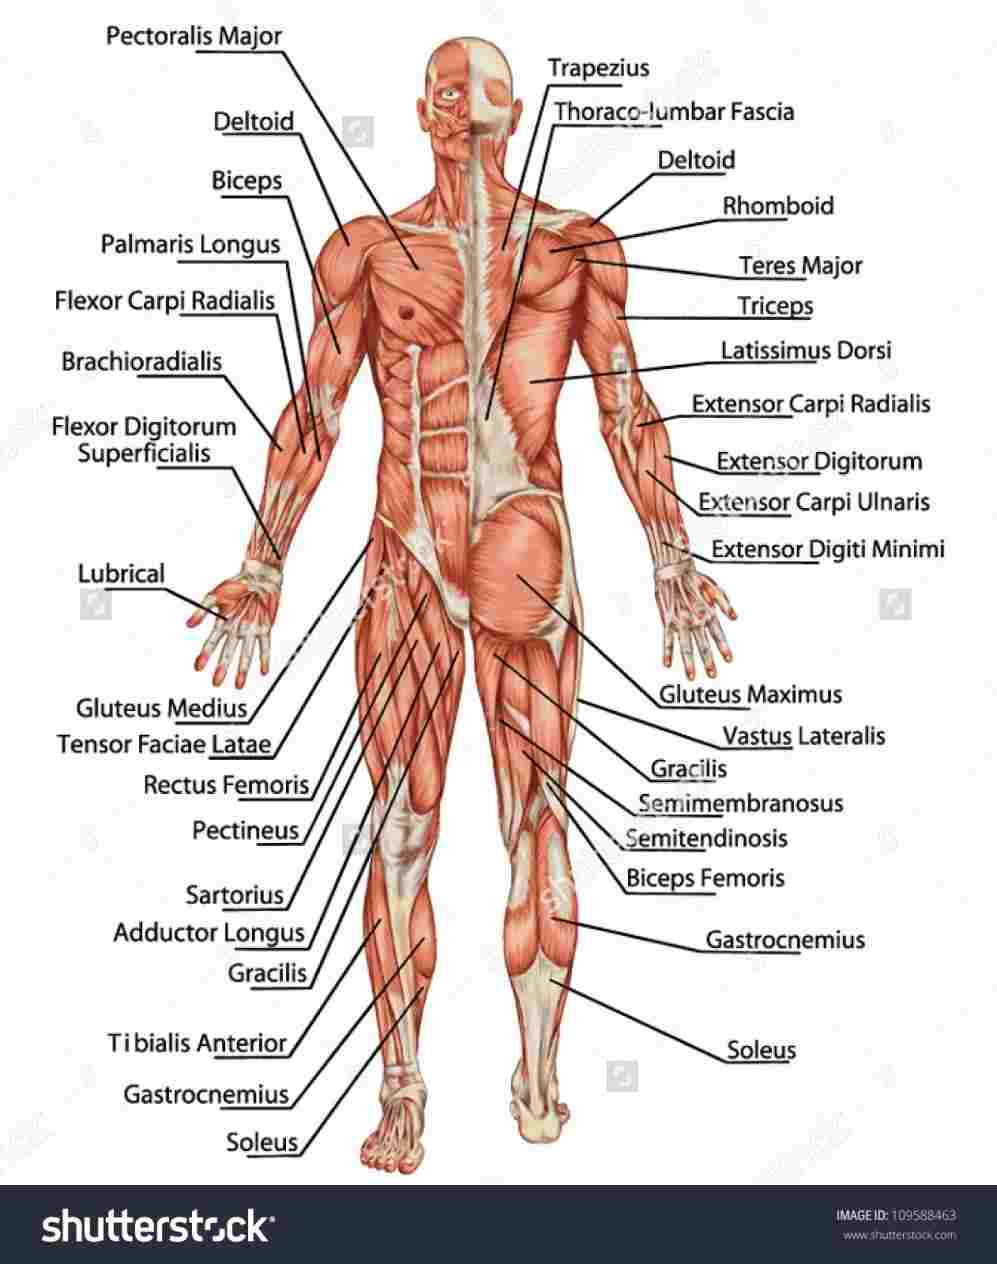 Diagram Of Human Body Organs Chart Upper Body Anatomy Diagram Of Upper Body Organs Human